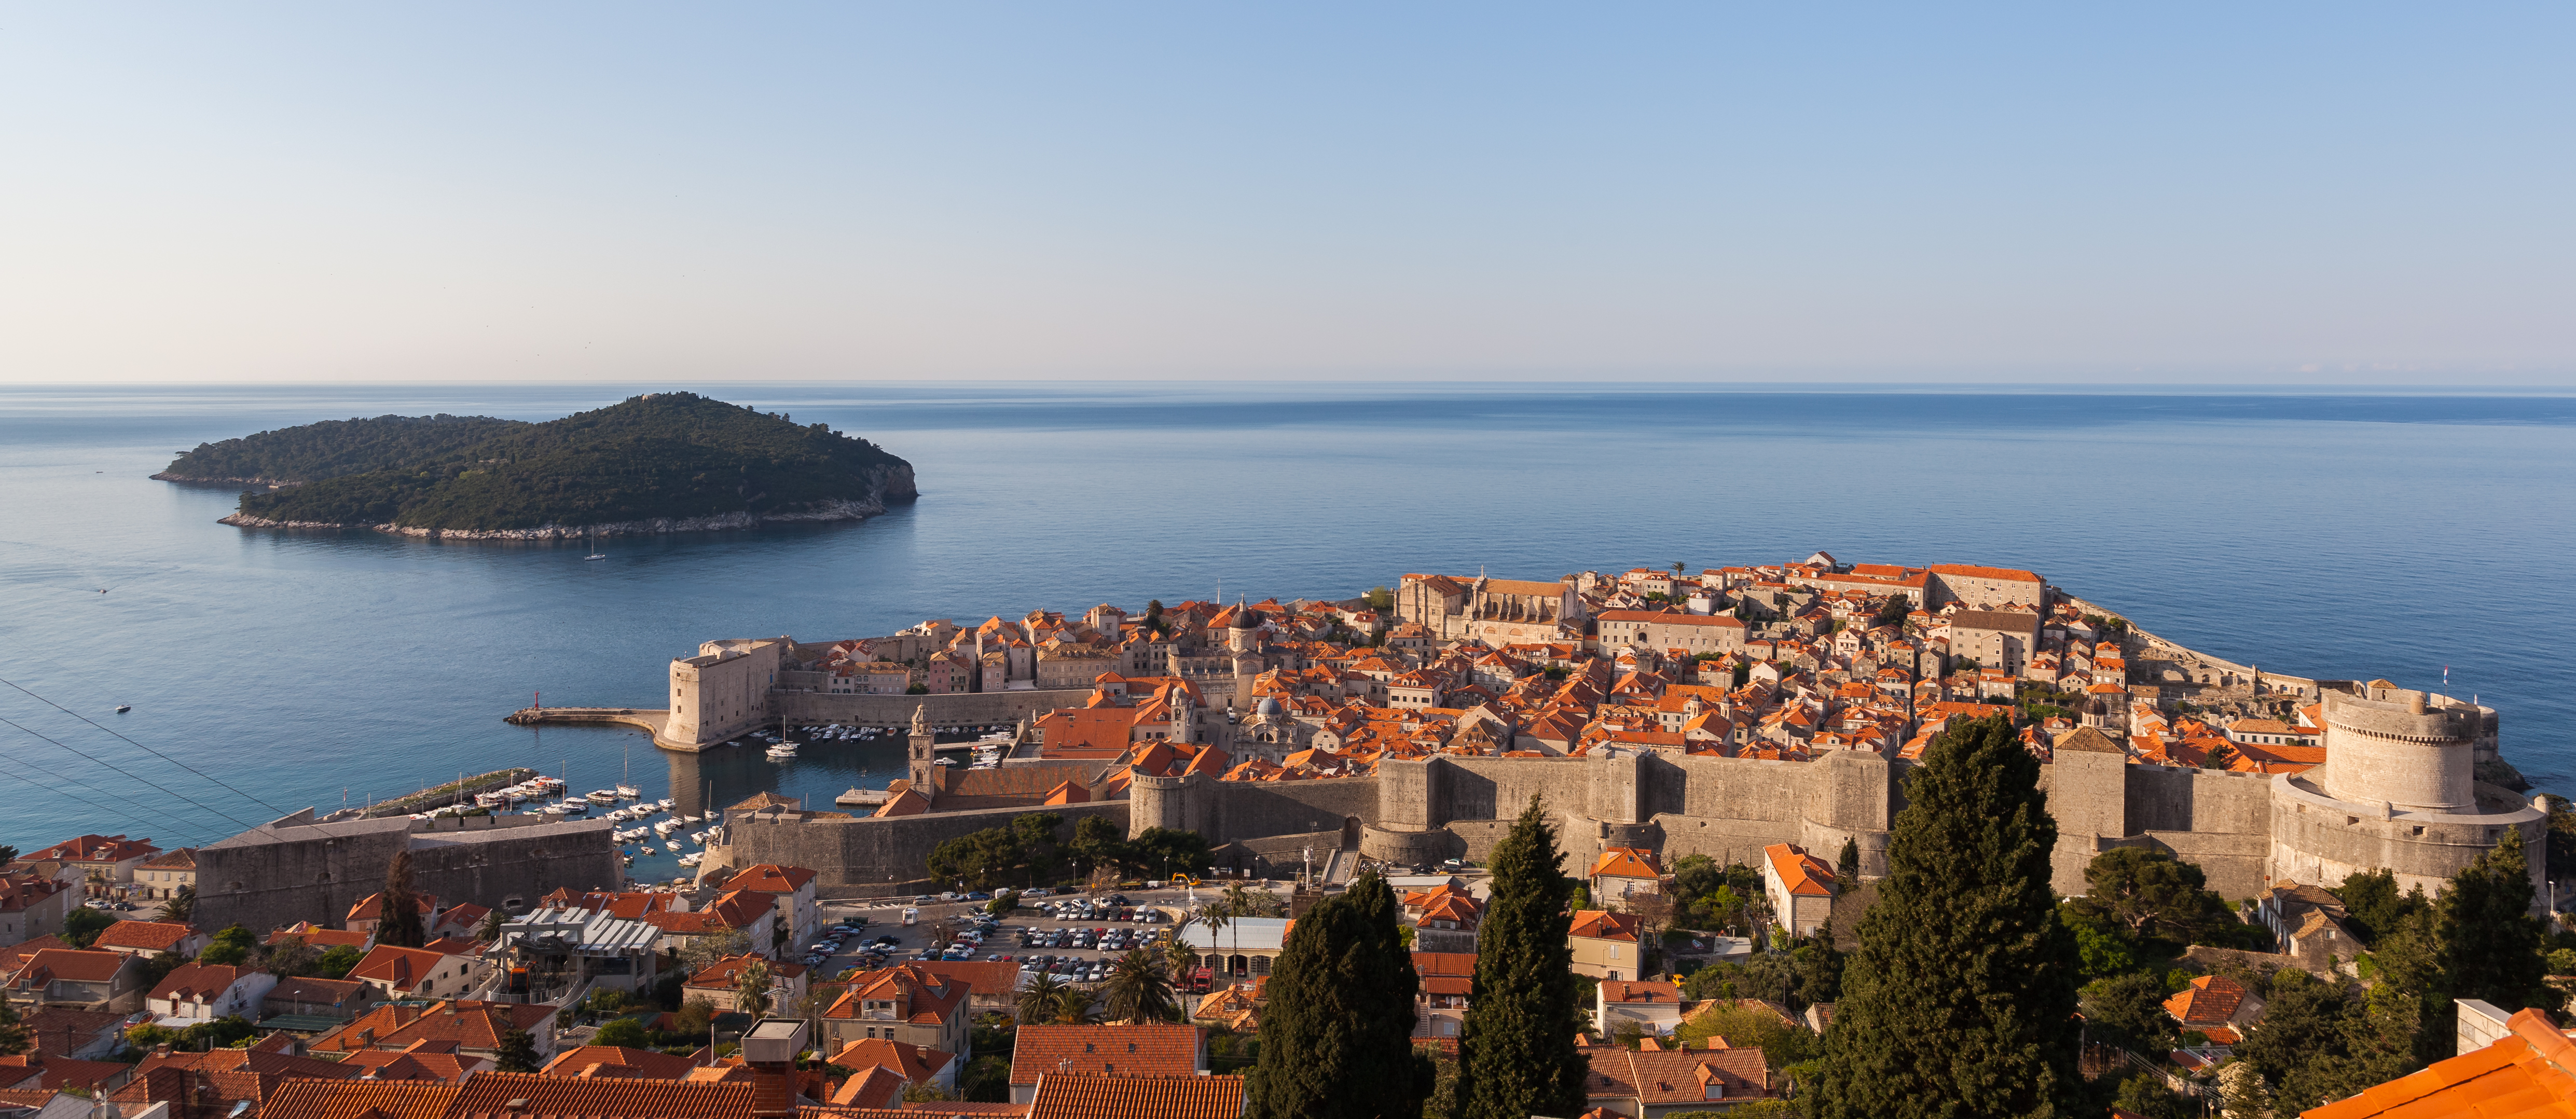 Casco viejo de Dubrovnik, Croacia, 2014-04-14, DD 01